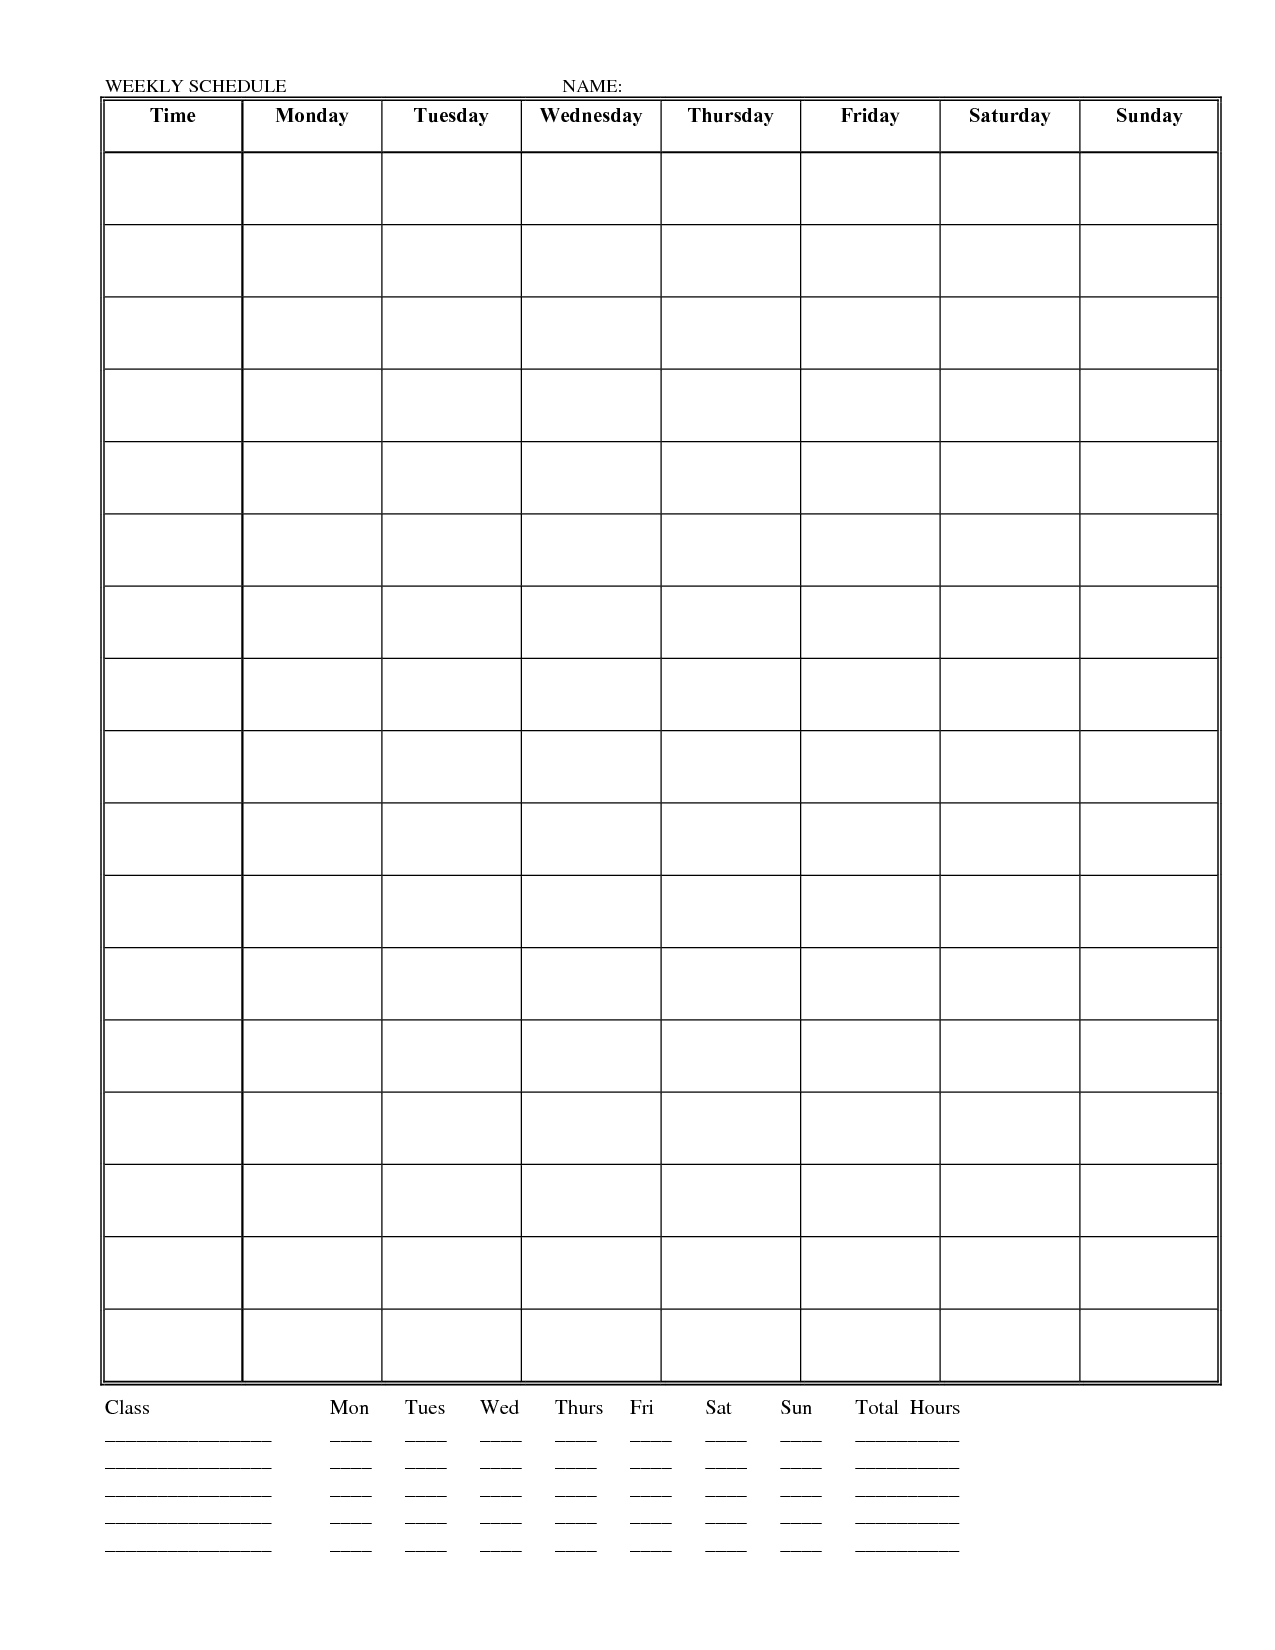 13 Blank Weekly Work Schedule Template Images Free Daily Work Schedule Template Printable 